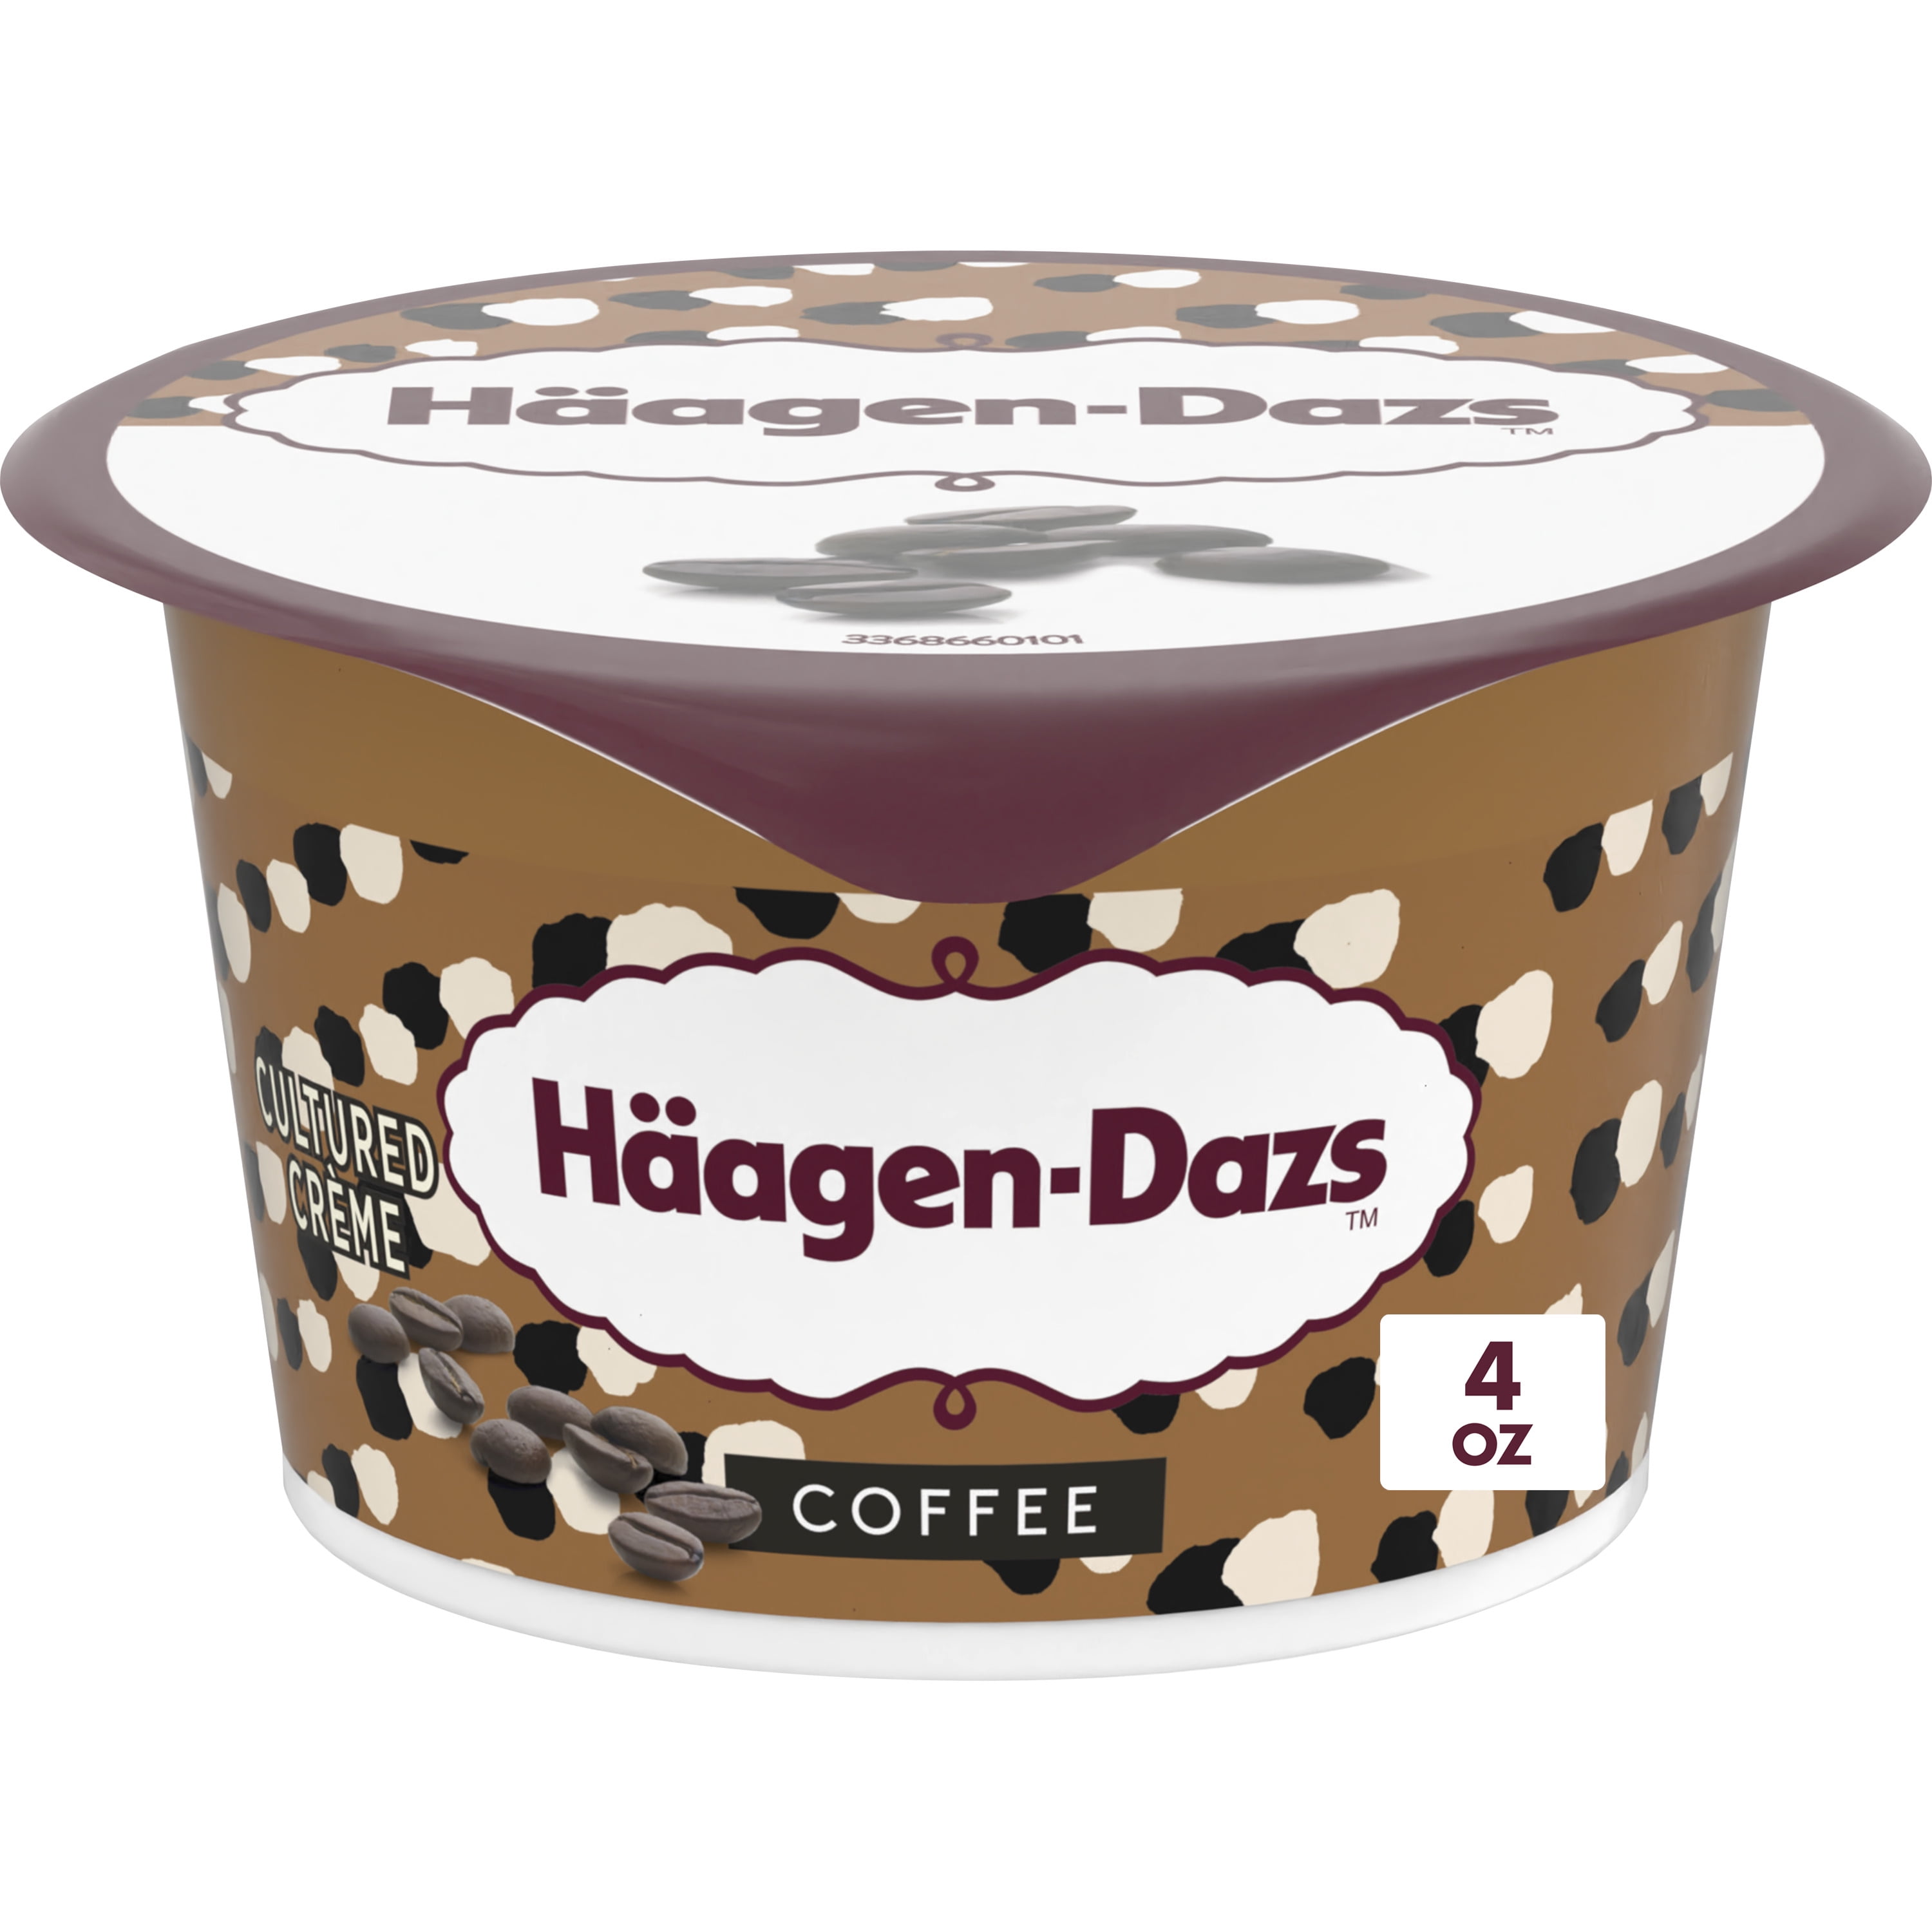 Haagen Dazs Cultured Cream Yogurt Style Snack, Coffee, 4 oz Cup